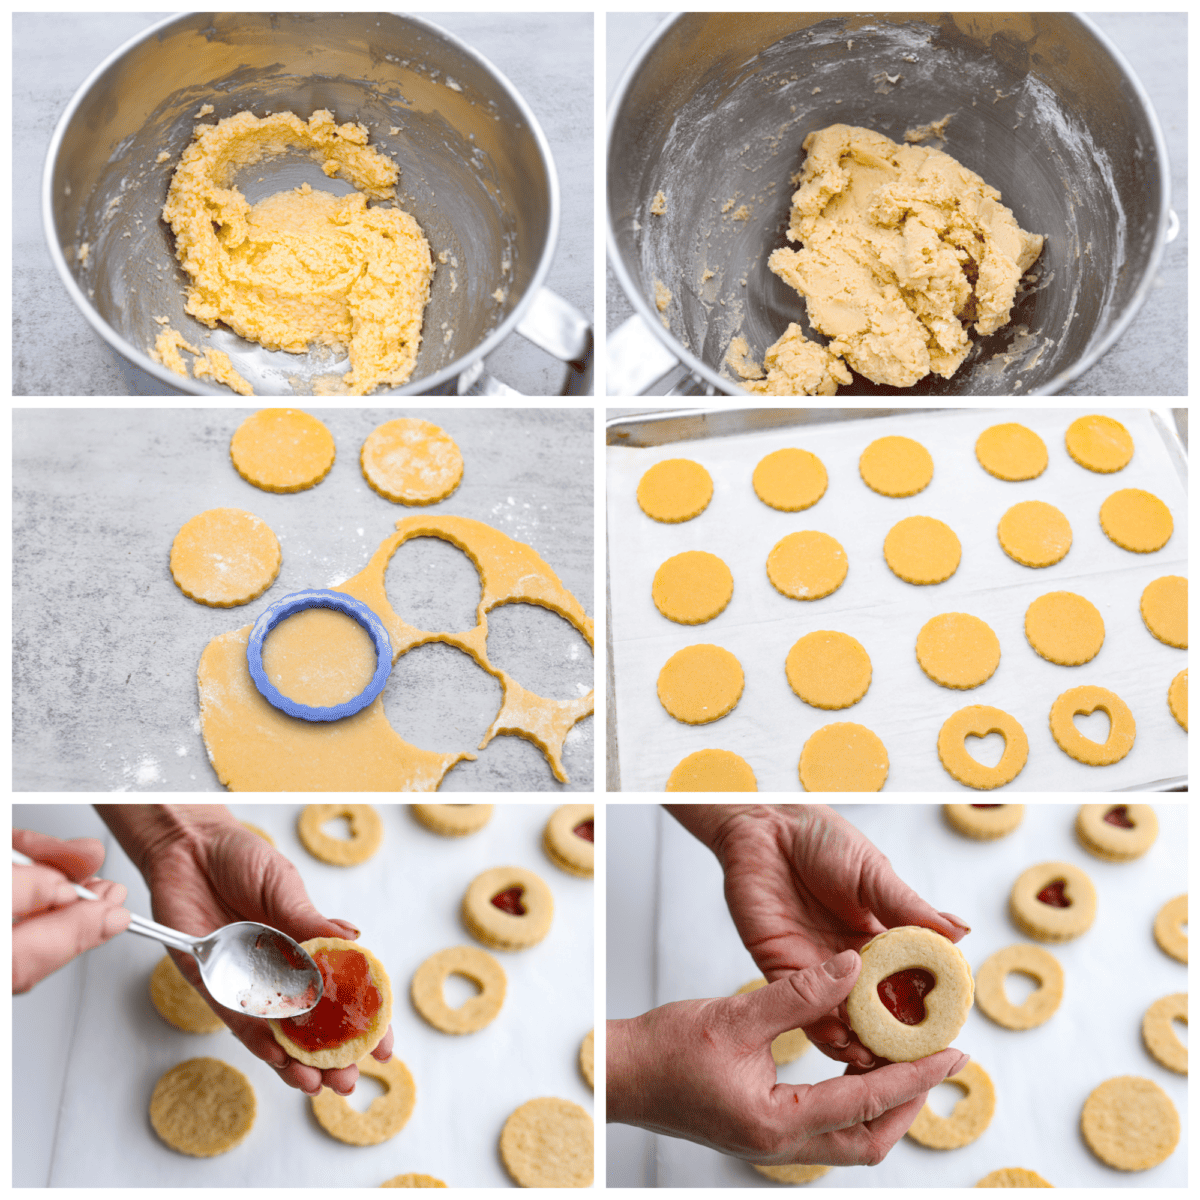 6-photo collage of jammie dodger cookies being prepared.